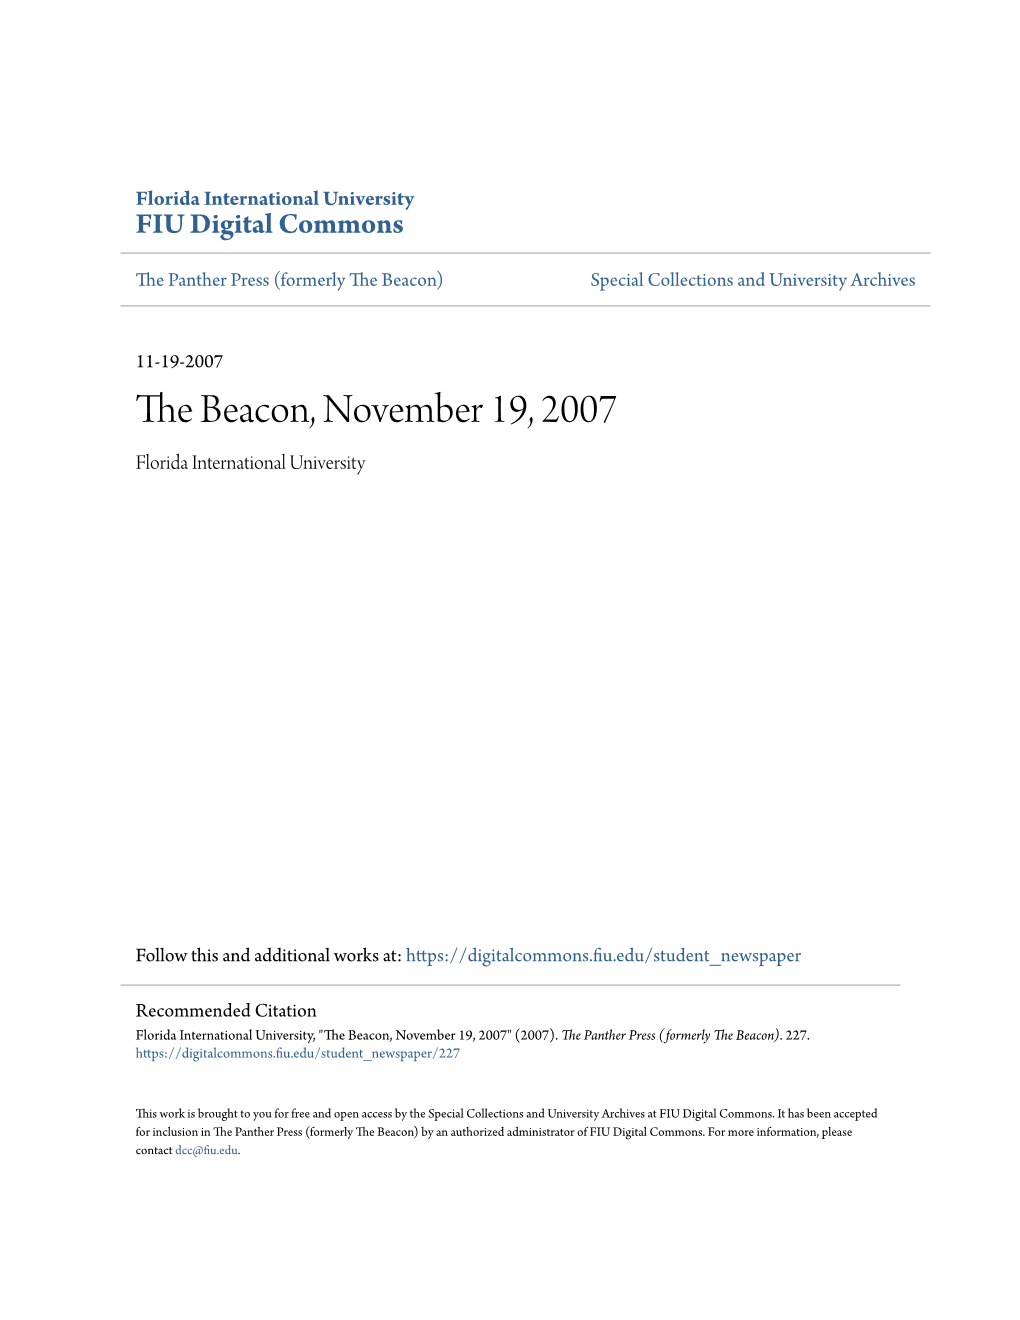 The Beacon, November 19, 2007 Florida International University